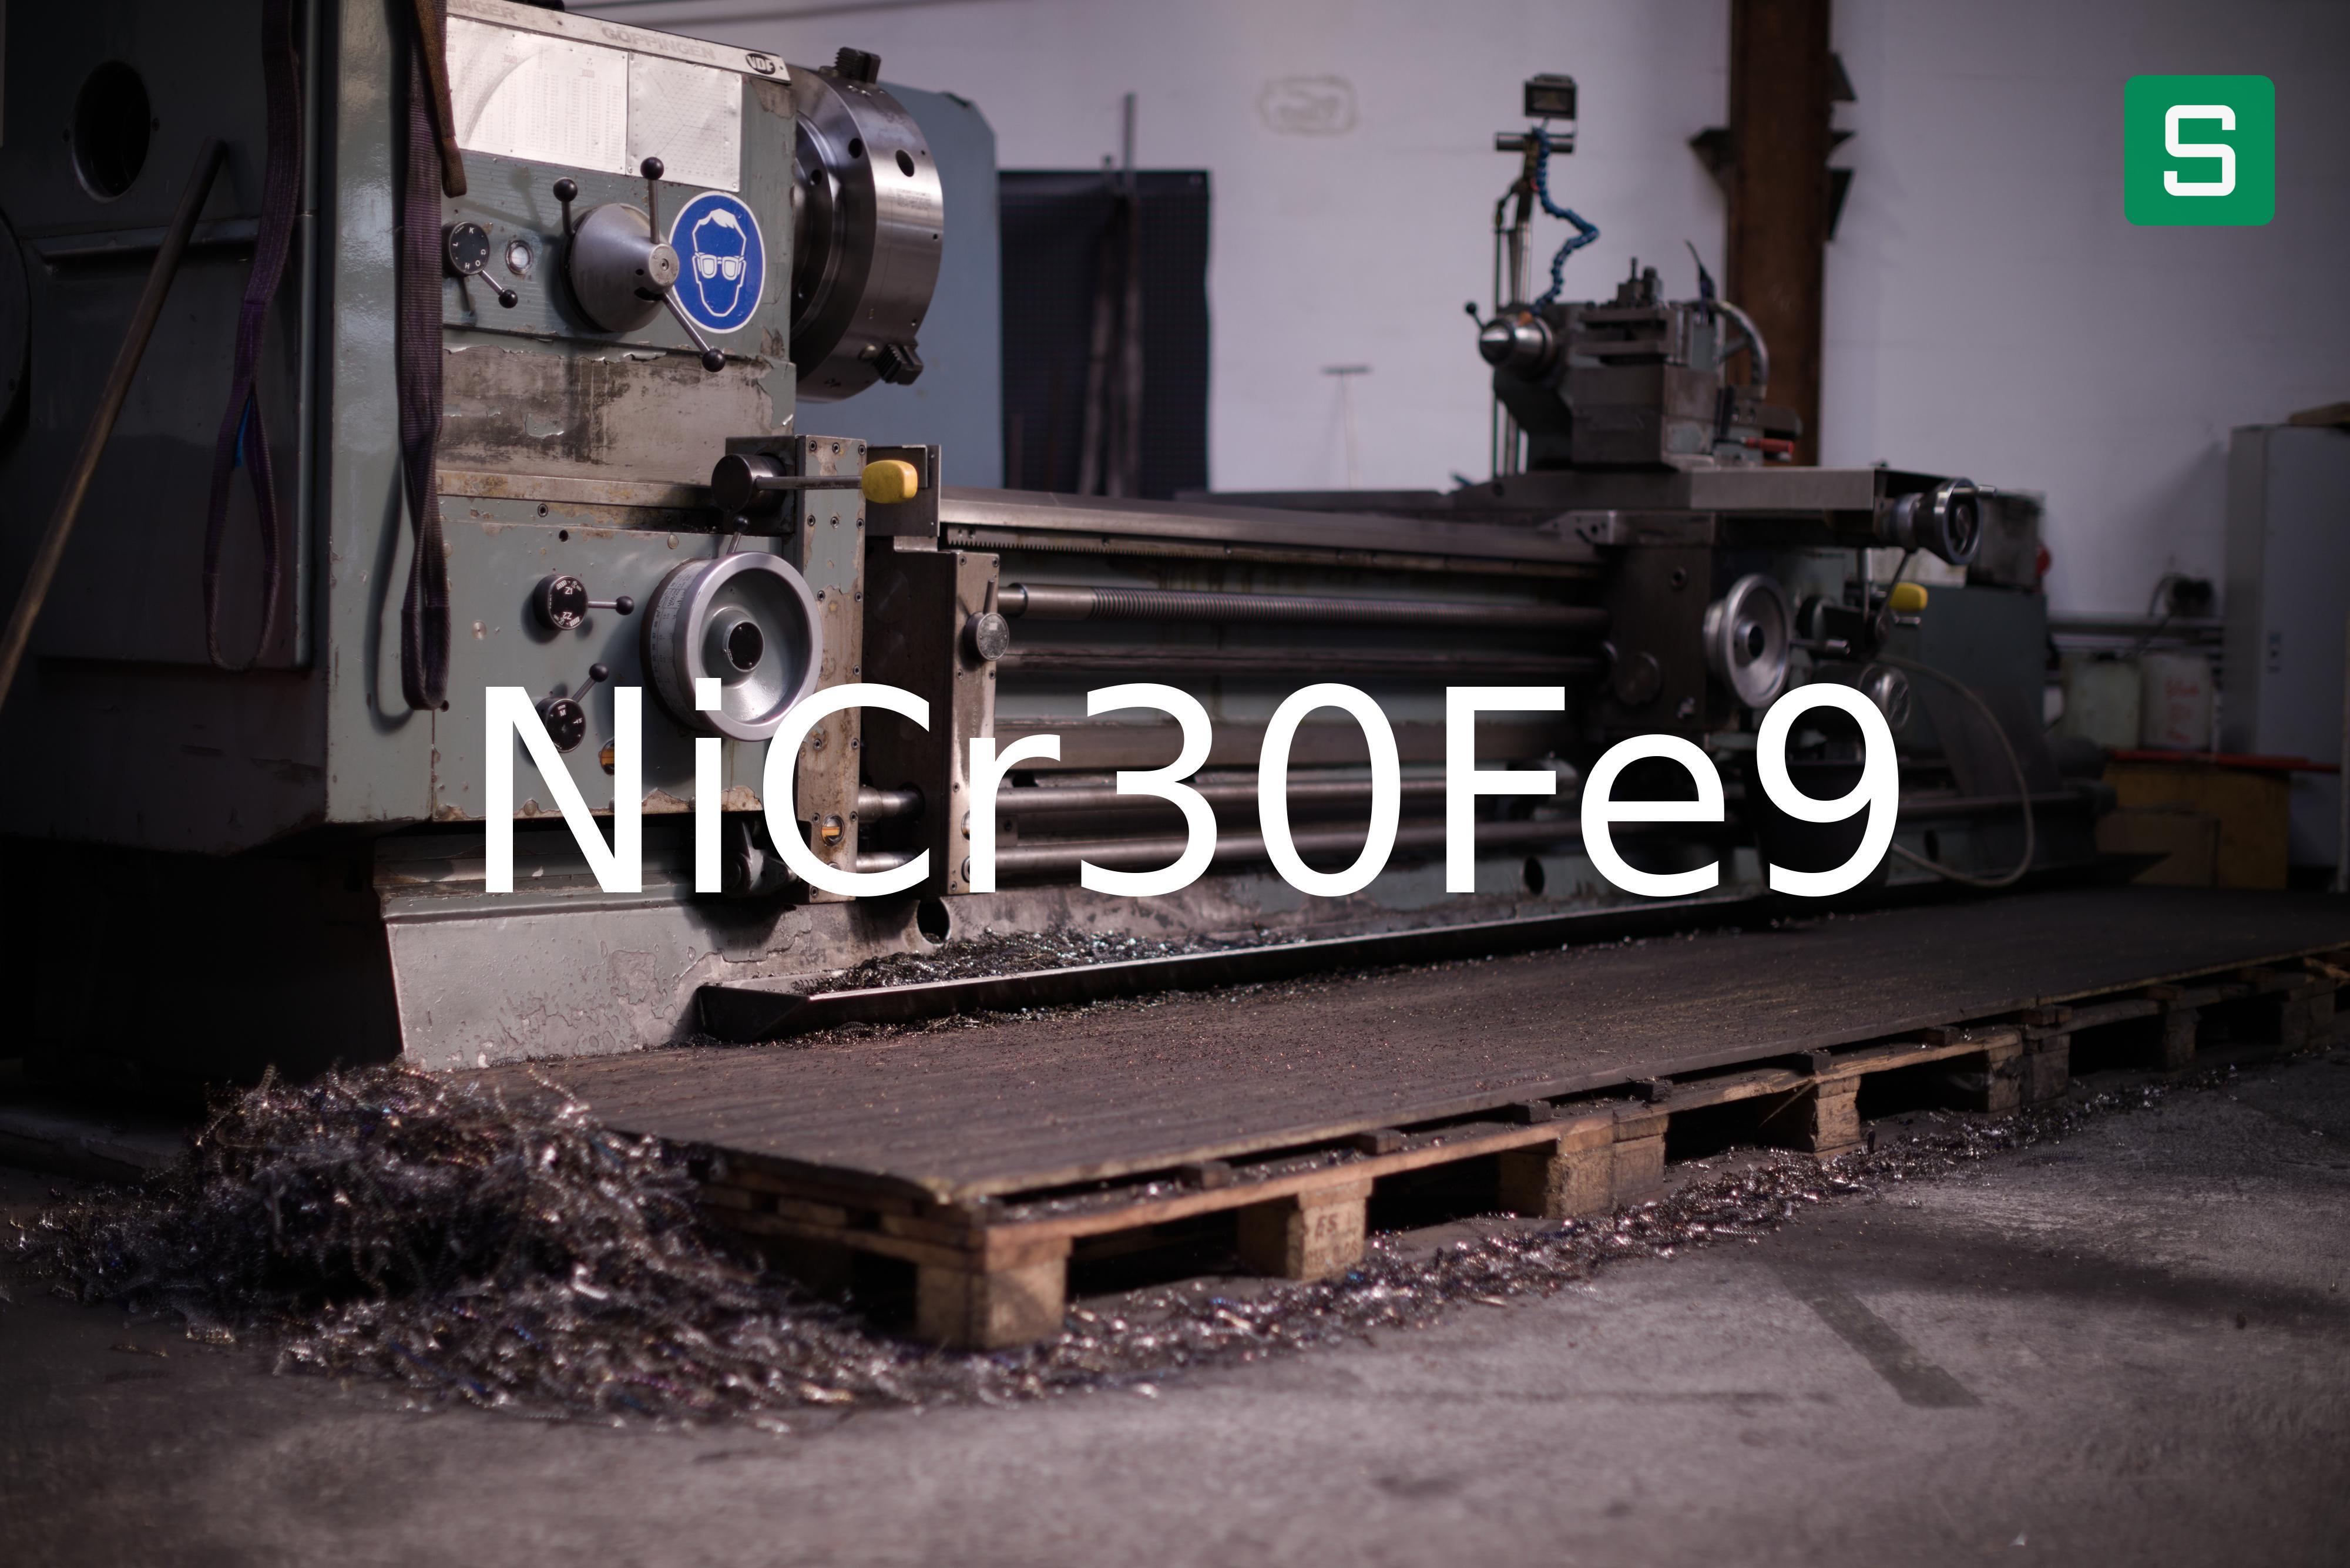 Steel Material: NiCr30Fe9